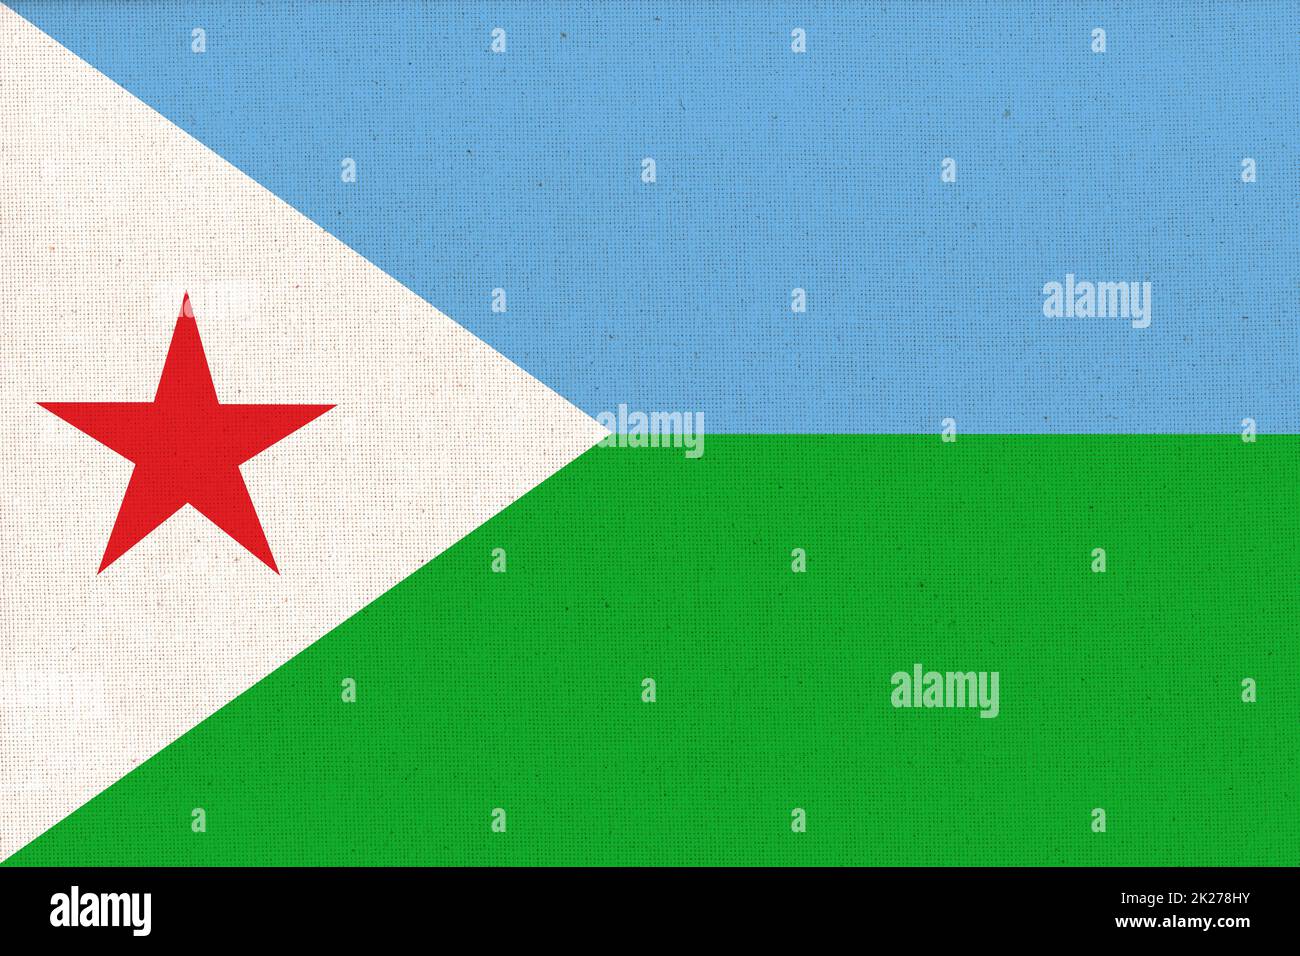 flag of Guinea. National flag on fabric surface Stock Photo